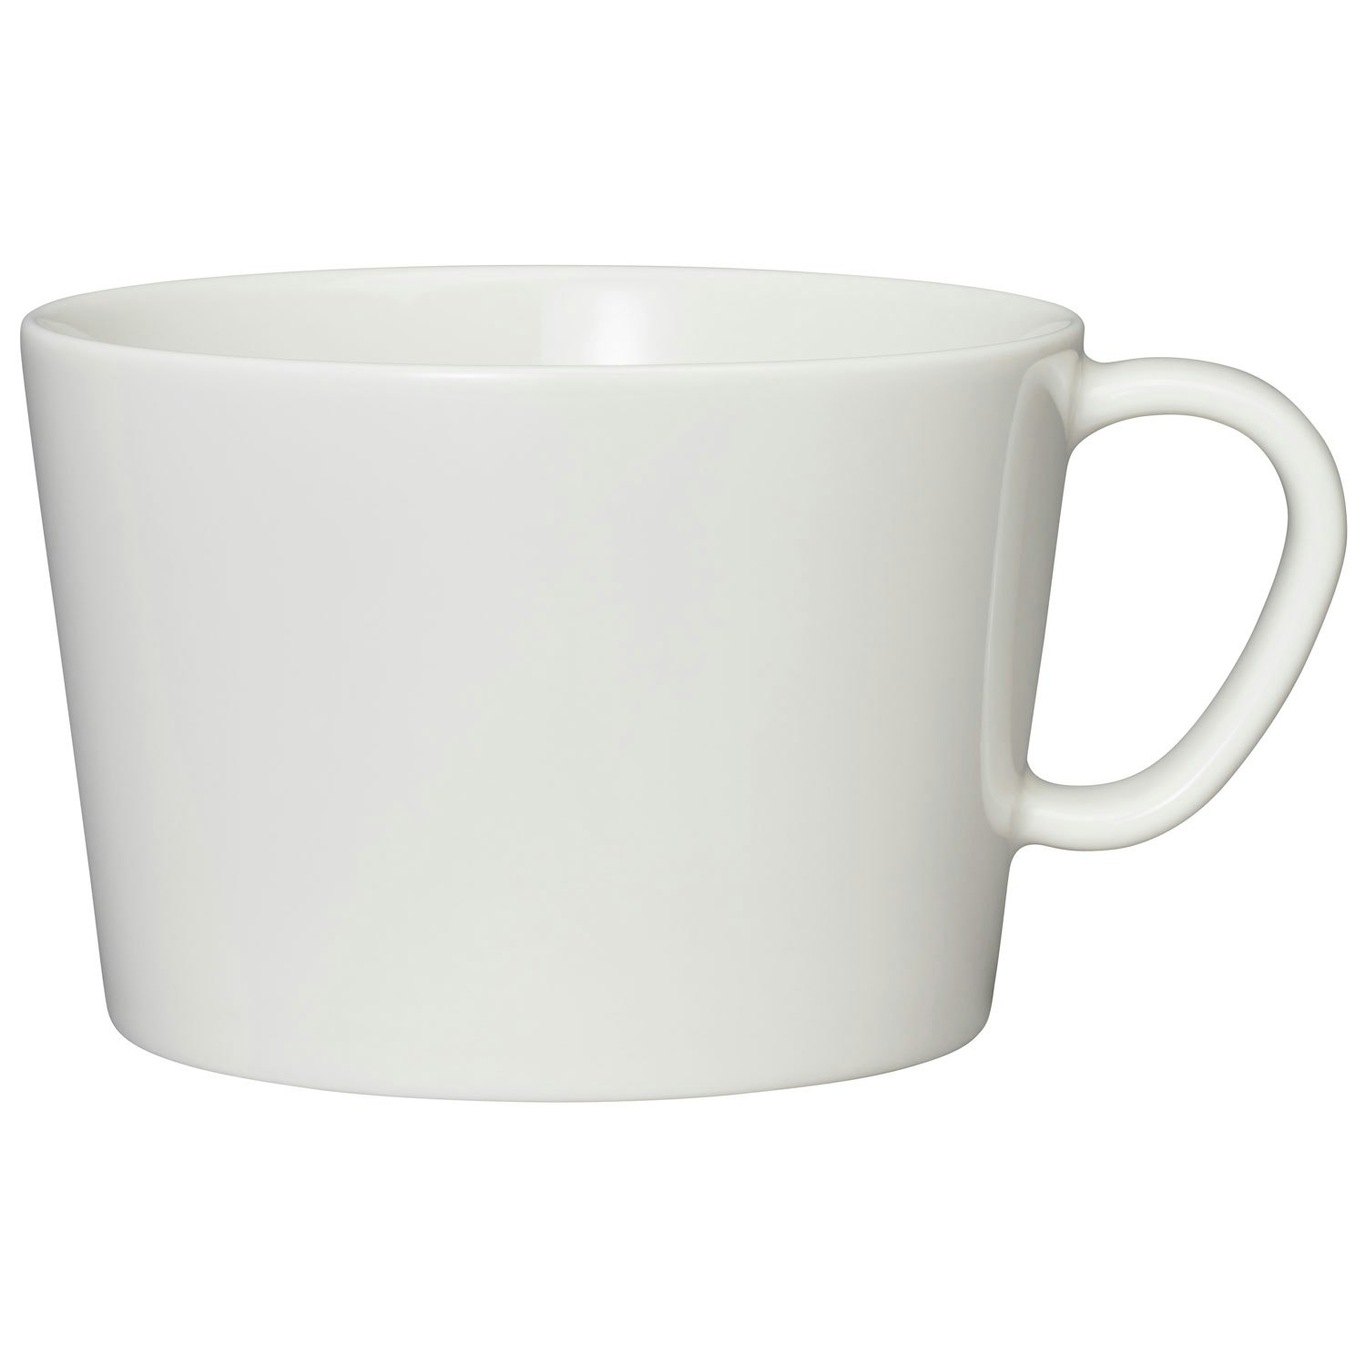 Mainio Cup White, 40 cl